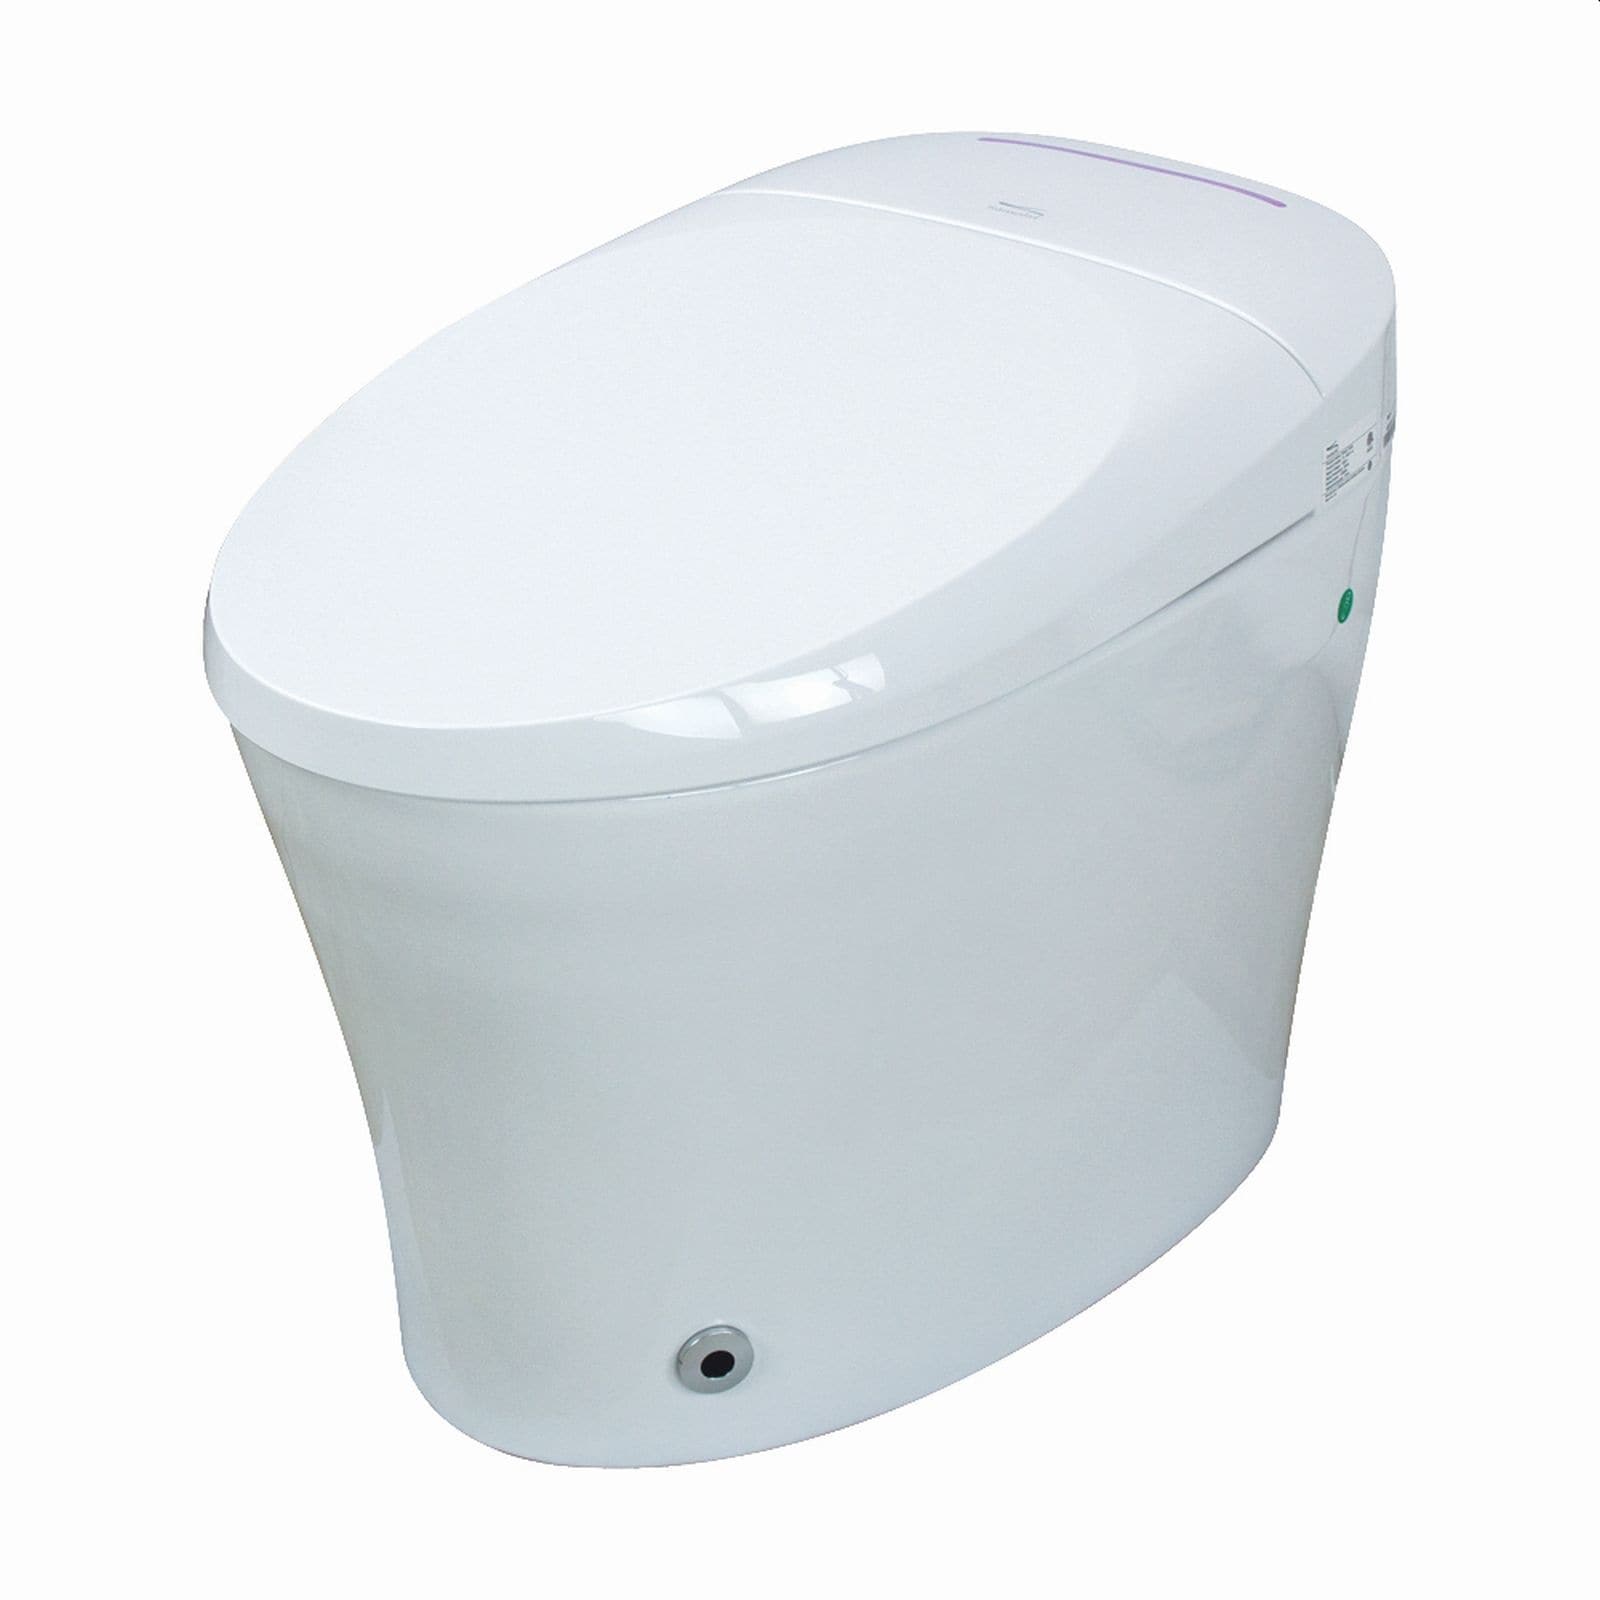 White/Green Dual Flush Elongated Toilet - The Renovators Supply I